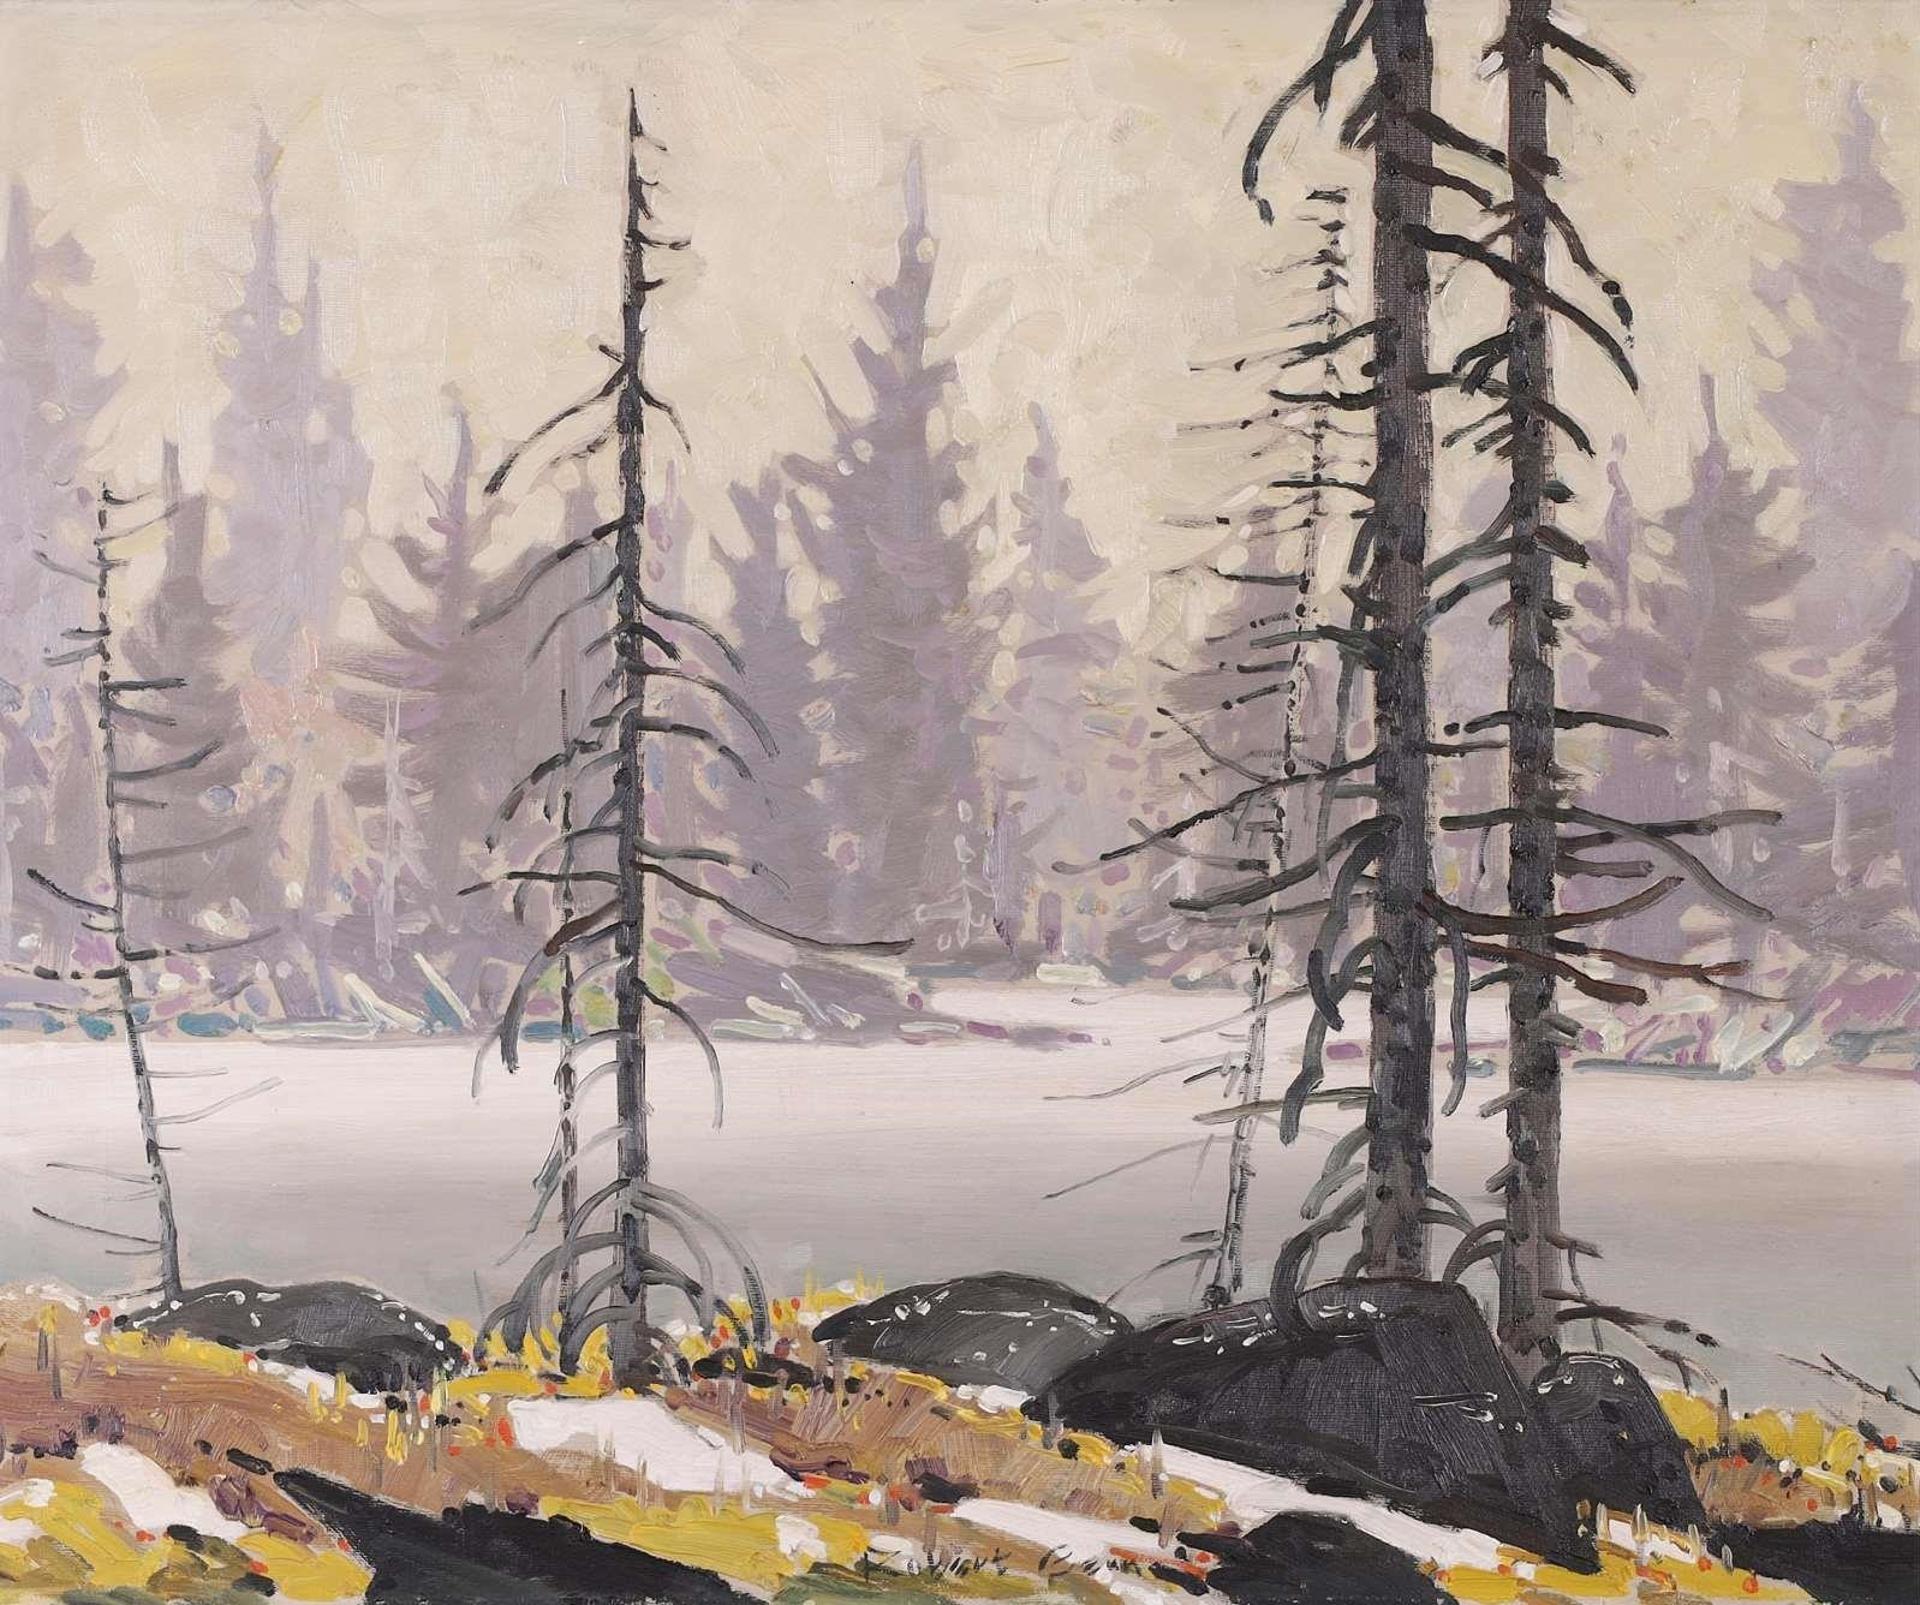 Robert Douglas Genn (1936-2014) - At Wells Lake, Cariboo, B.C.; 1971